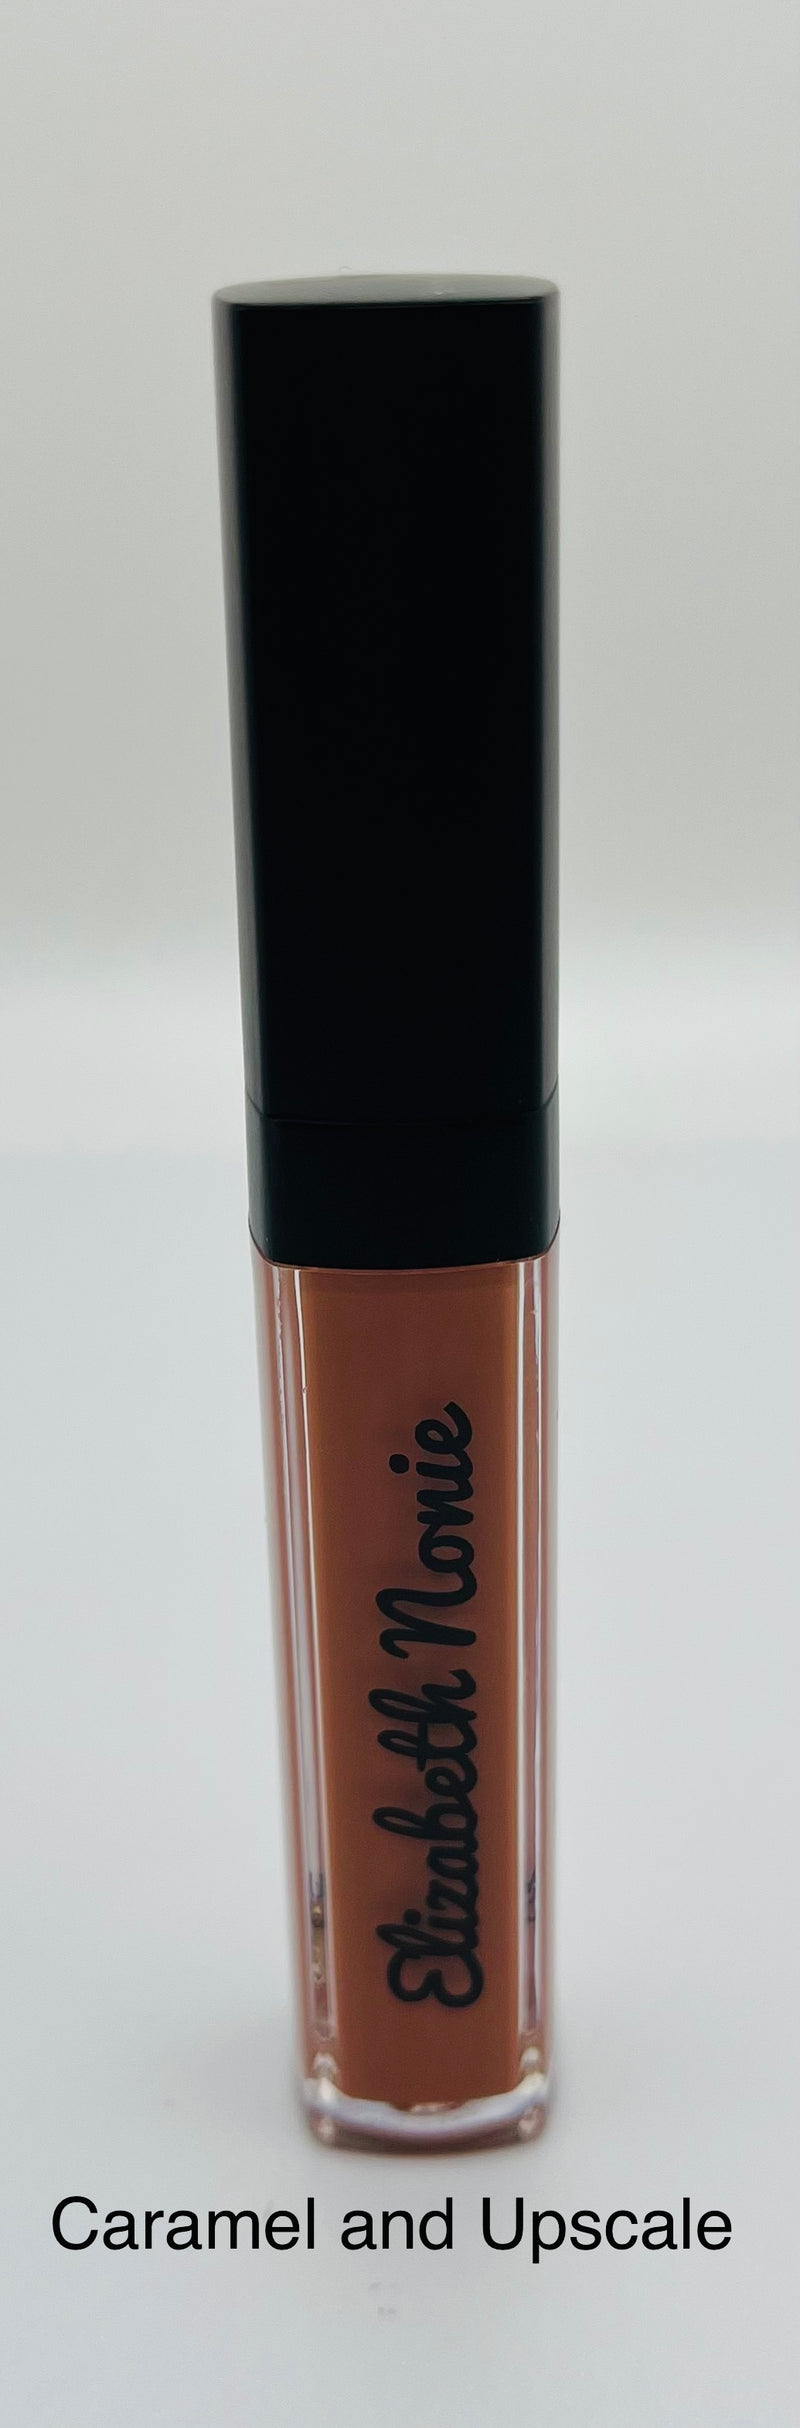 Caramel and Upscale Matte Liquid Lipstick